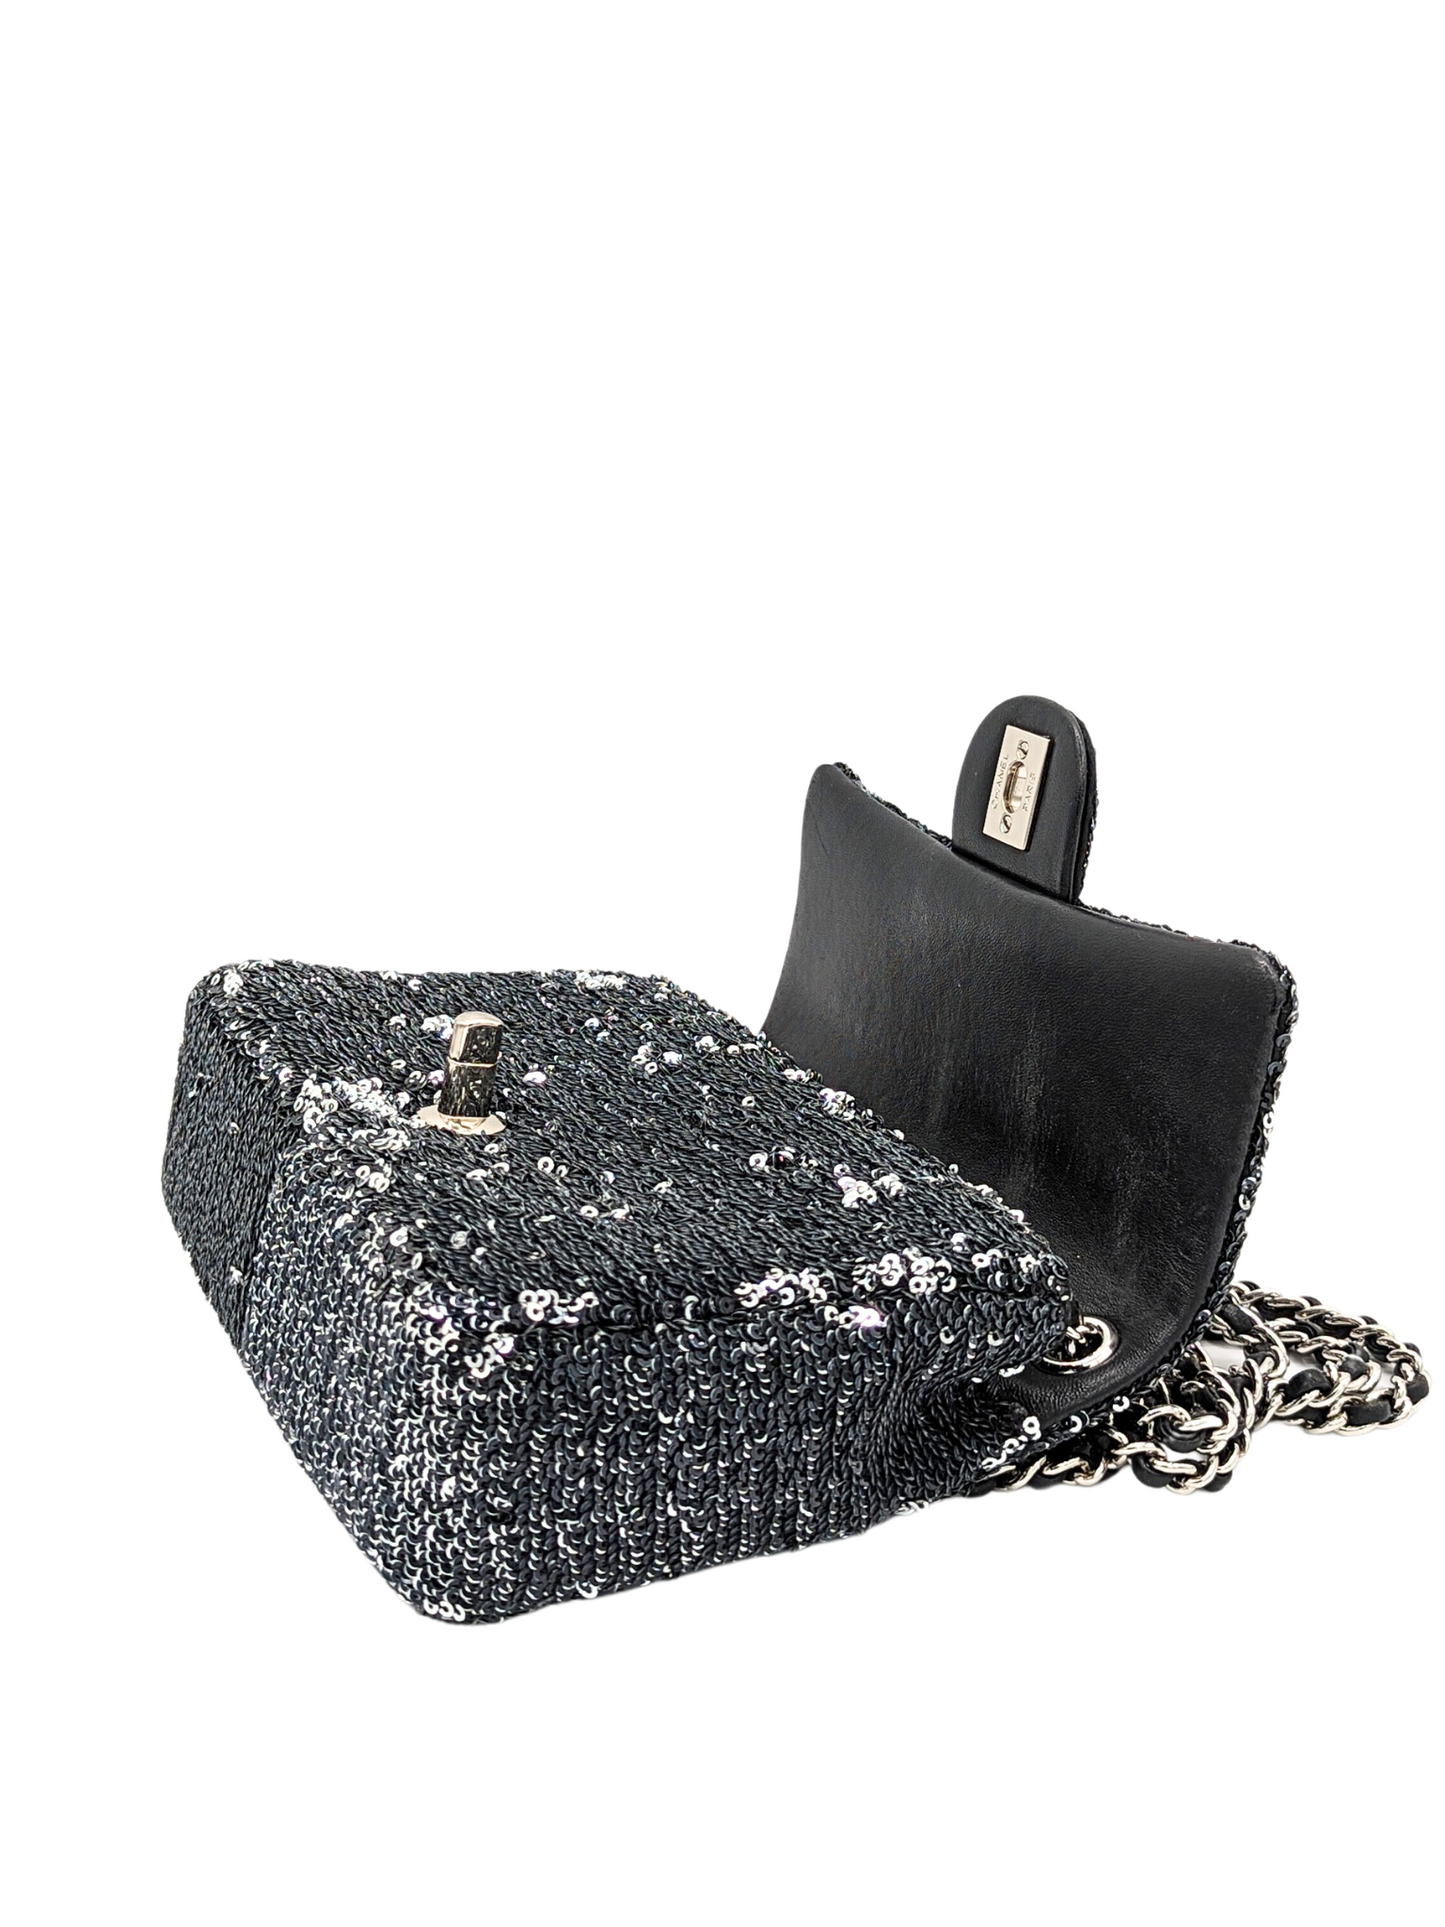 Chanel Classic Flap Bag in Blue Night Micro Glitter